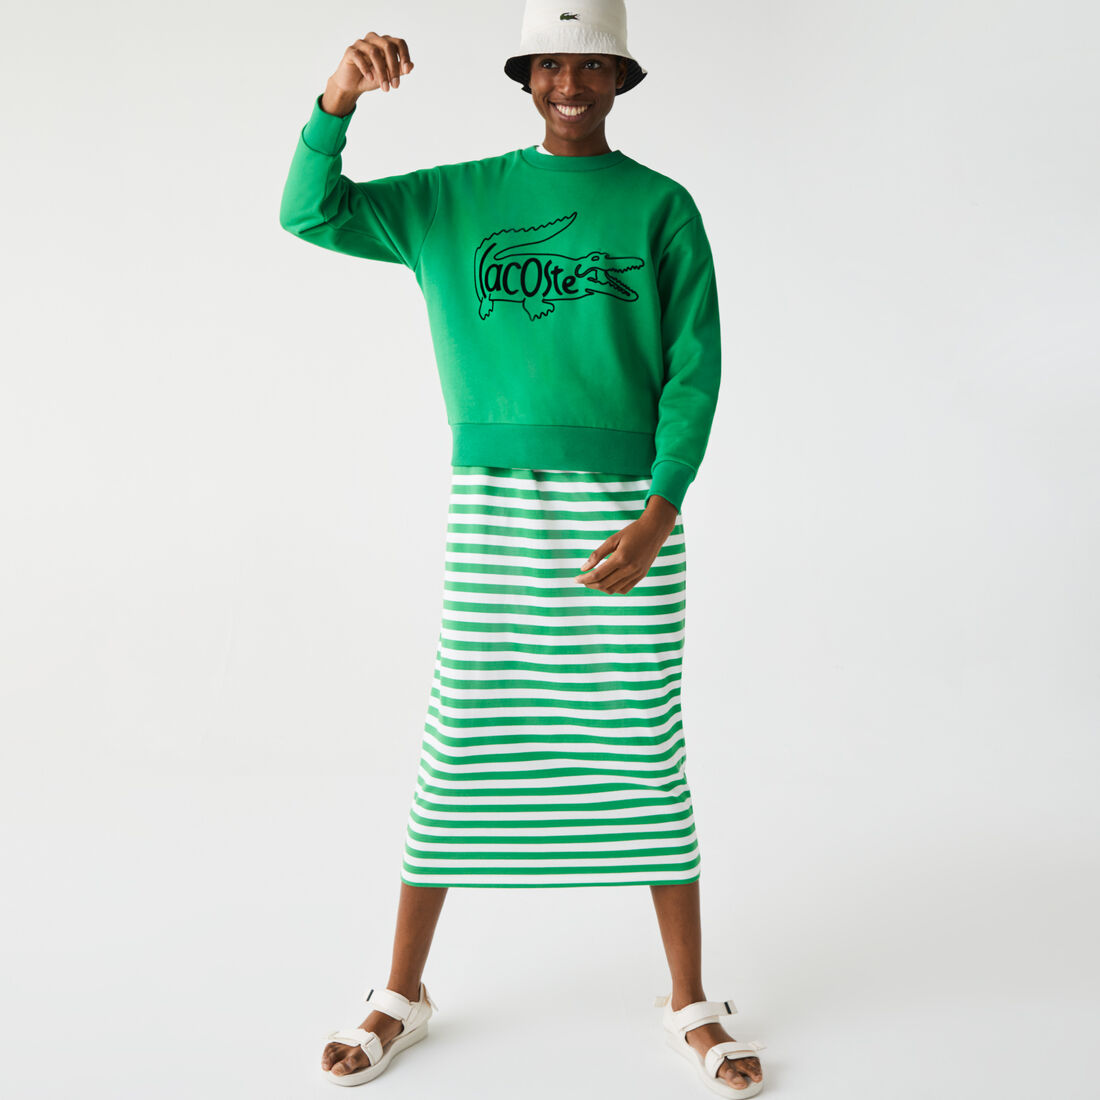 Women’s Crew Neck Crocodile Print Cotton Fleece Sweatshirt